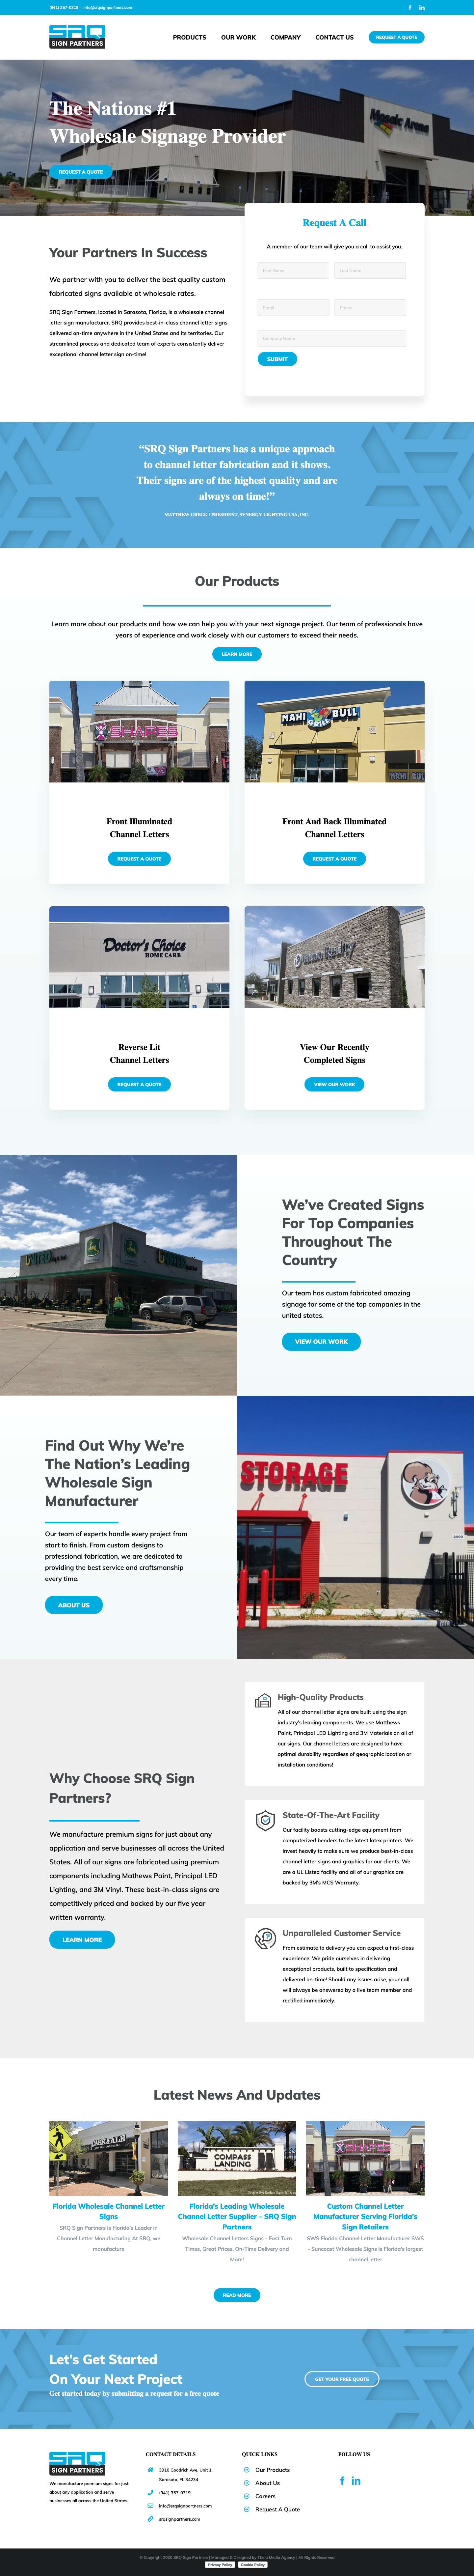 Screenshot_2020-09-02 Home - SRQ Sign Partners - Wholesale Sign Manufacturer - SRQ Sign Partners